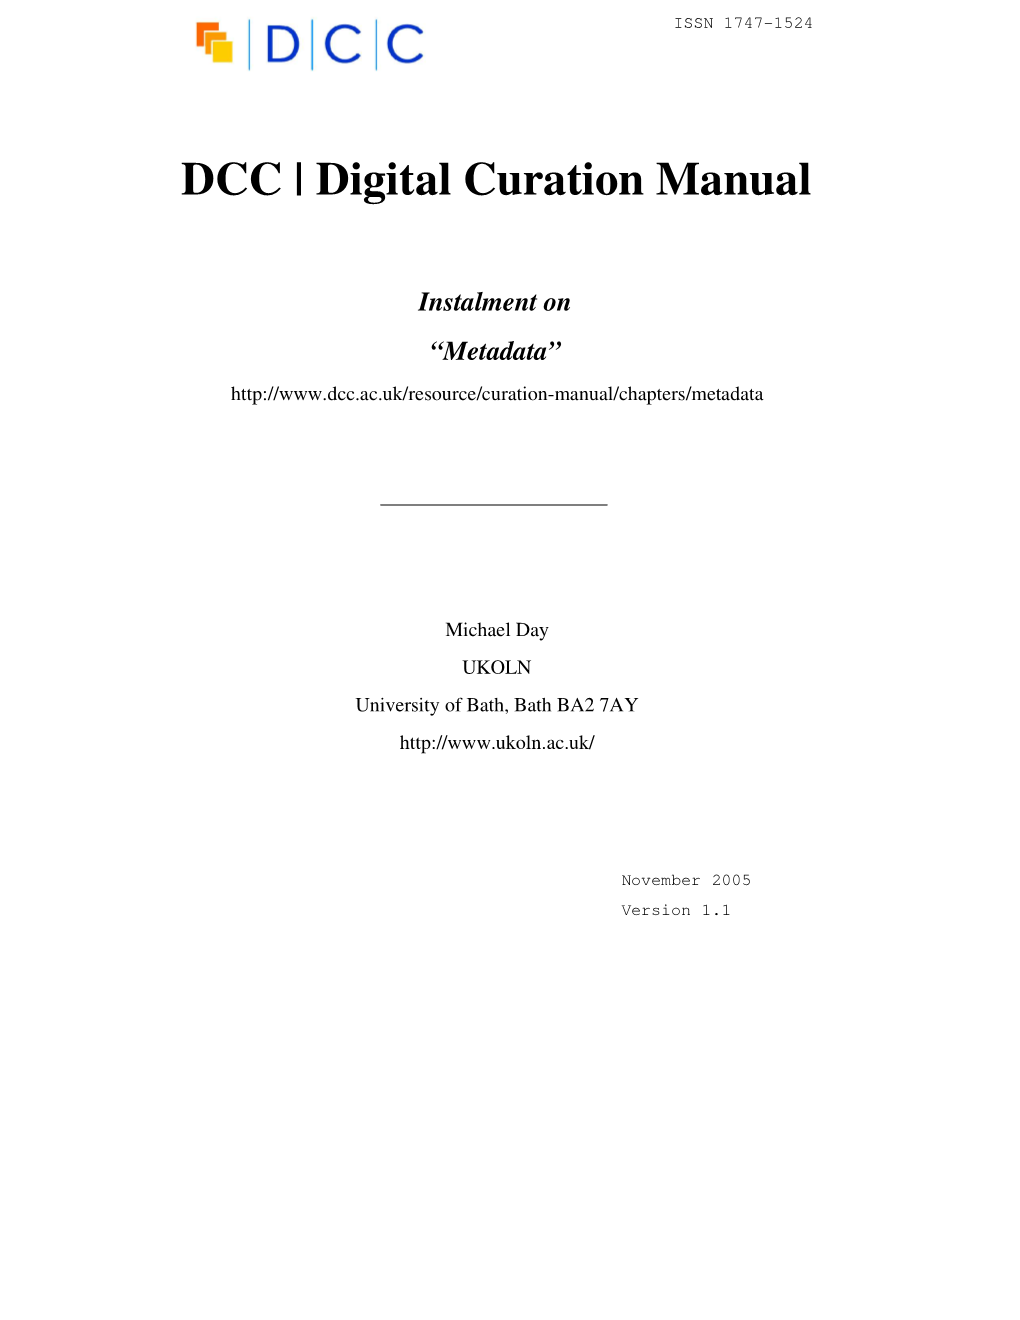 DCC | Digital Curation Manual Instalment on "Metadata"